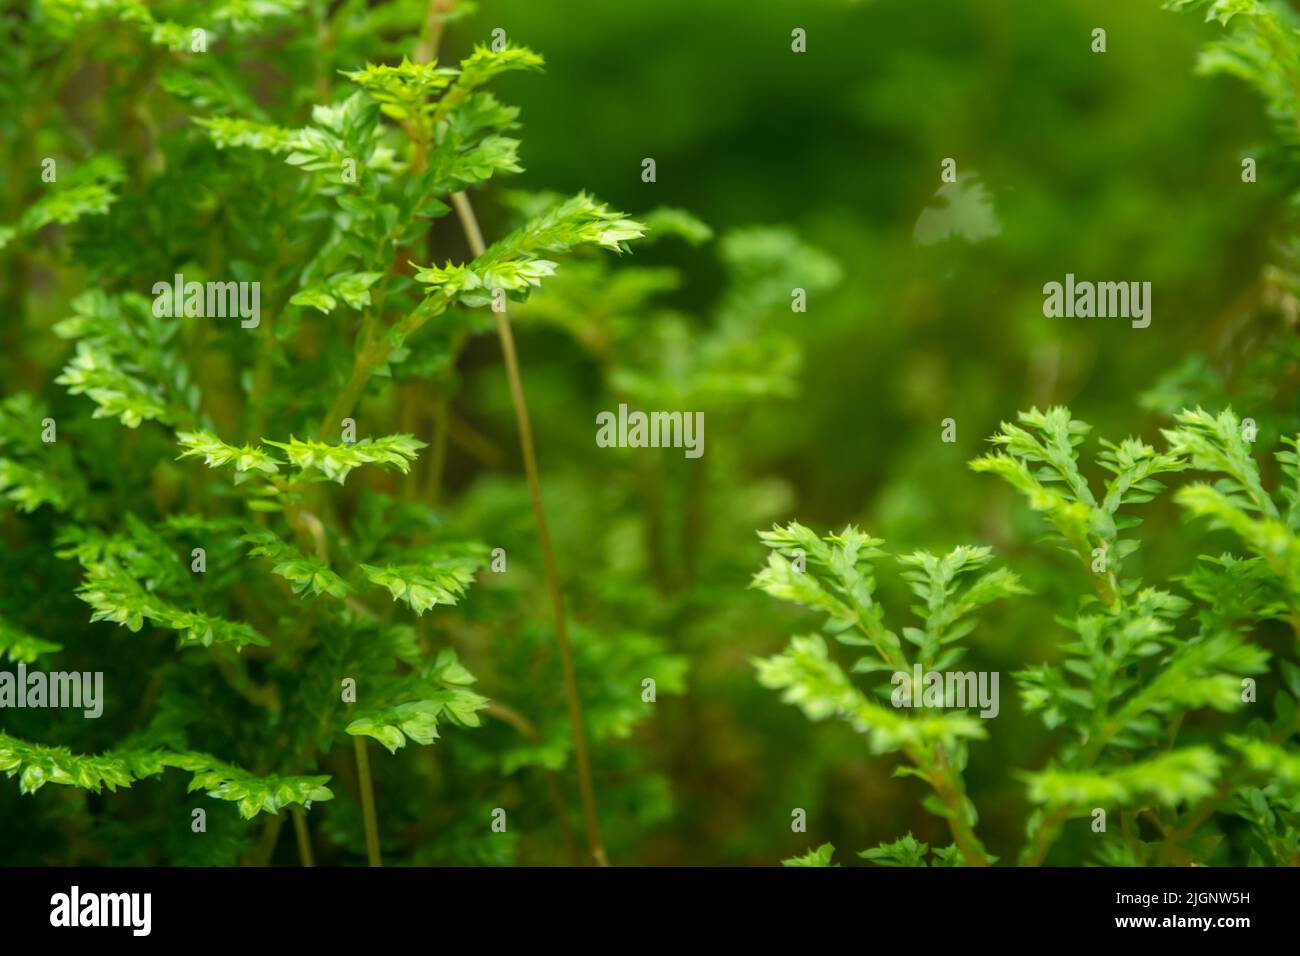 Full-frame texture background of Spike Moss fern leaves Stock Photo